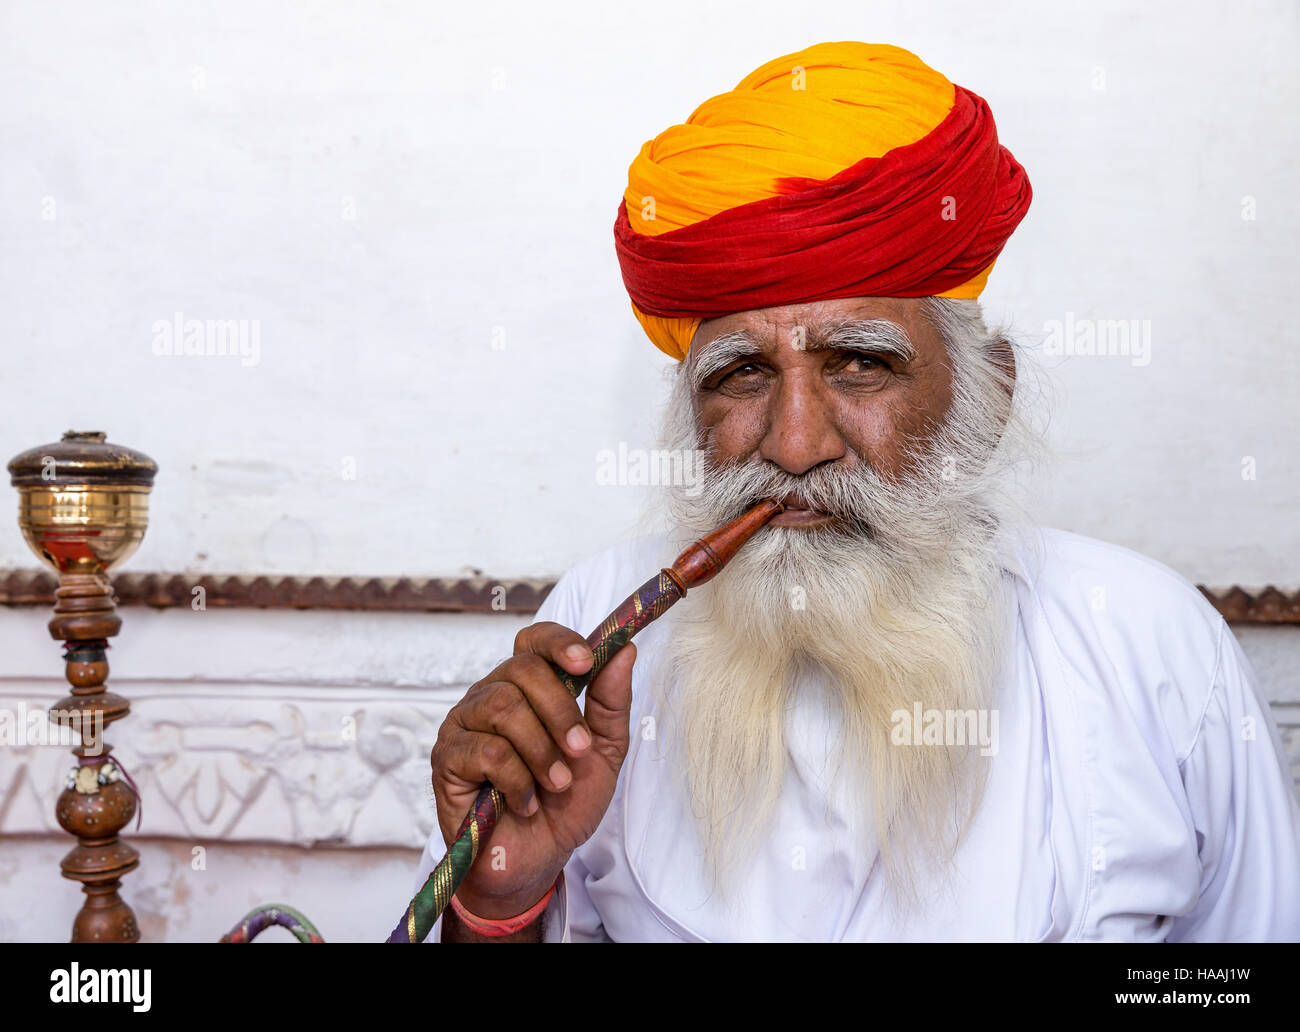 Indian man with turban smoke the hookah, Mehrangarh Fort, Jodhpur, Rajasthan, India Stock Photo